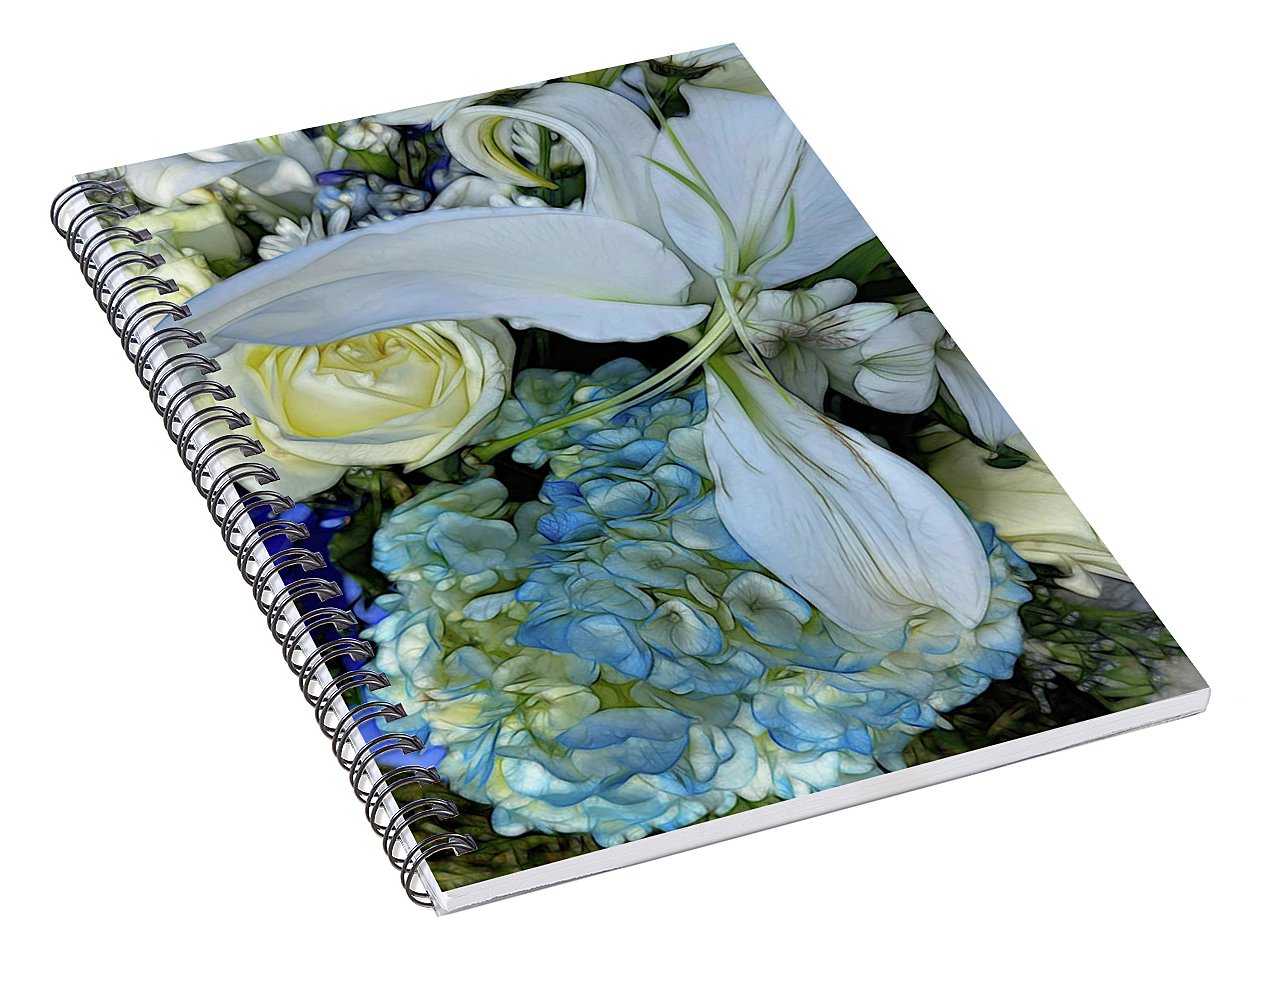 November Flowers 1 - Spiral Notebook